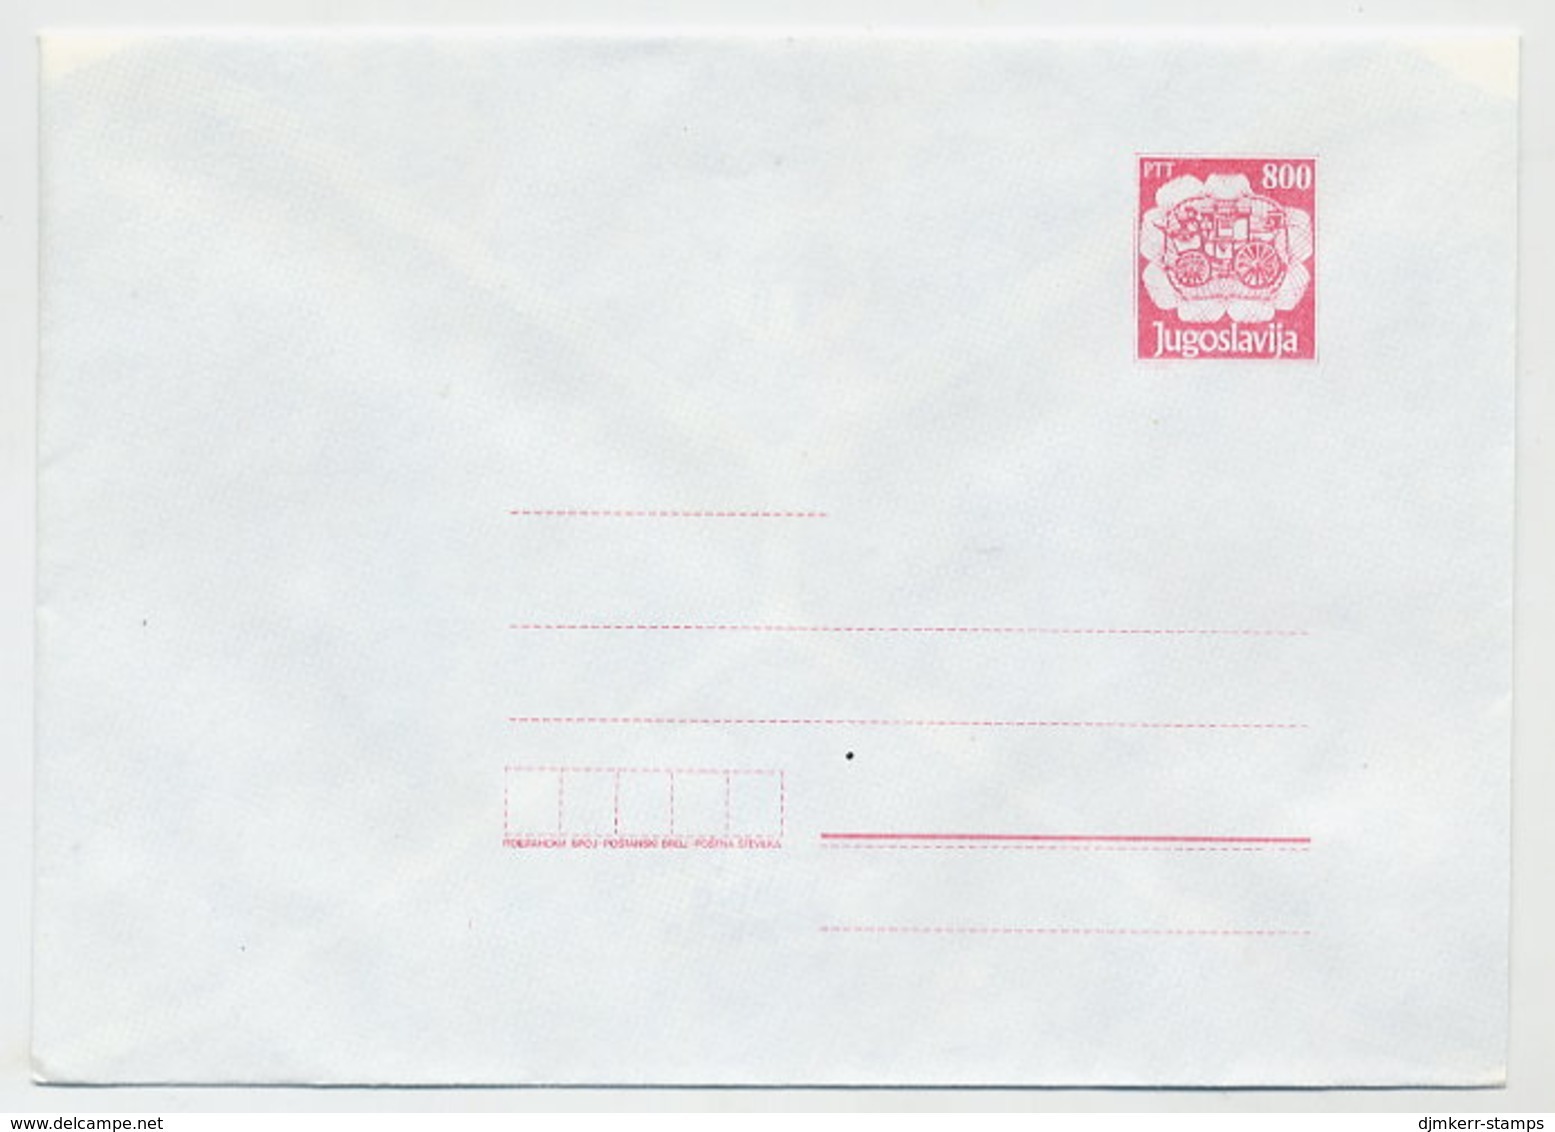 YUGOSLAVIA 1989 Postal Coach 800. D. Envelope, Unused.  Michel U91 - Ganzsachen